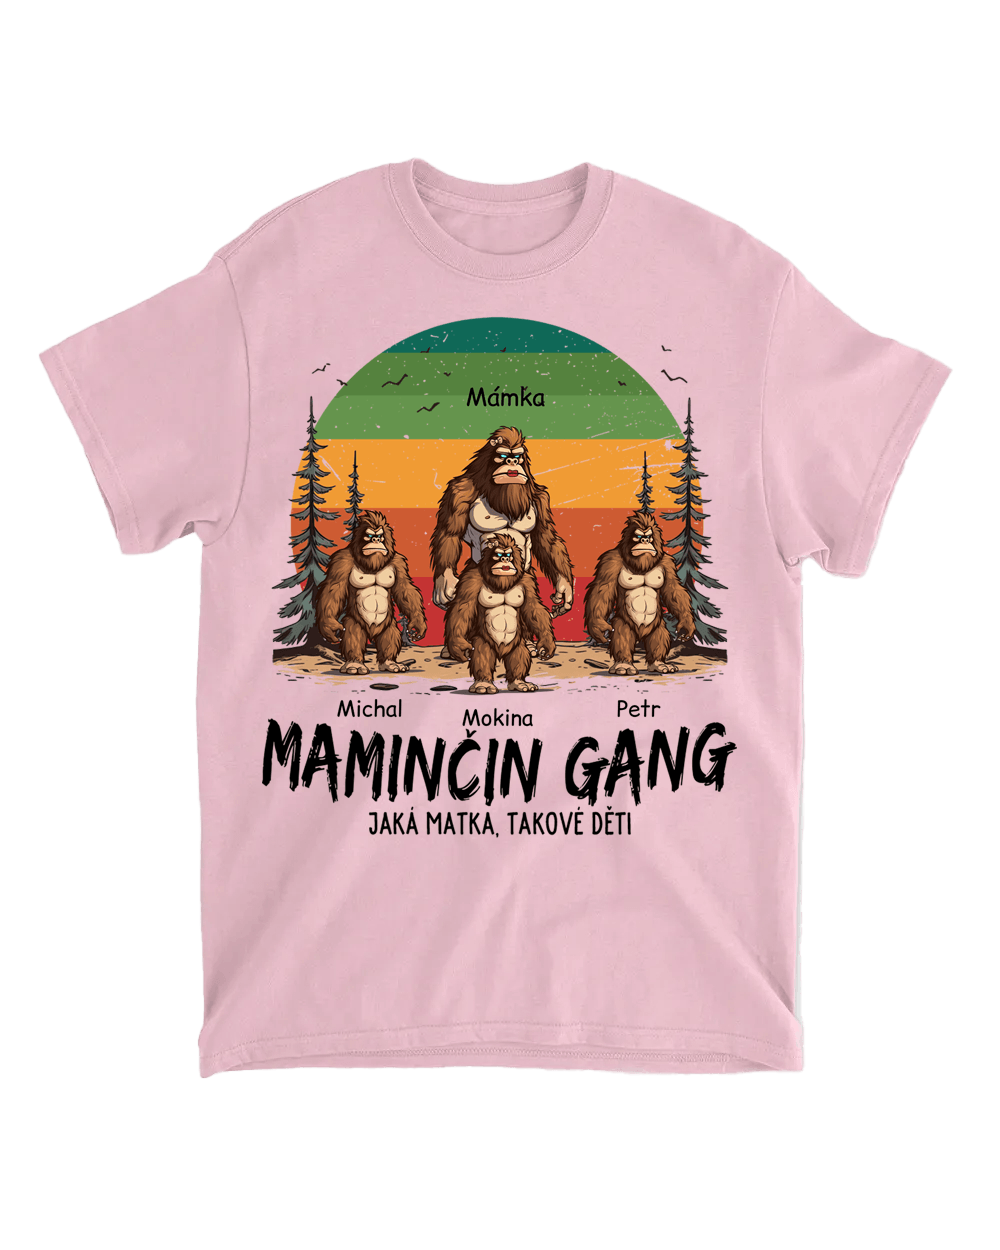 Tričko - Maminčin gang, jaká matka, takové děti - až 11 dětí - Climo